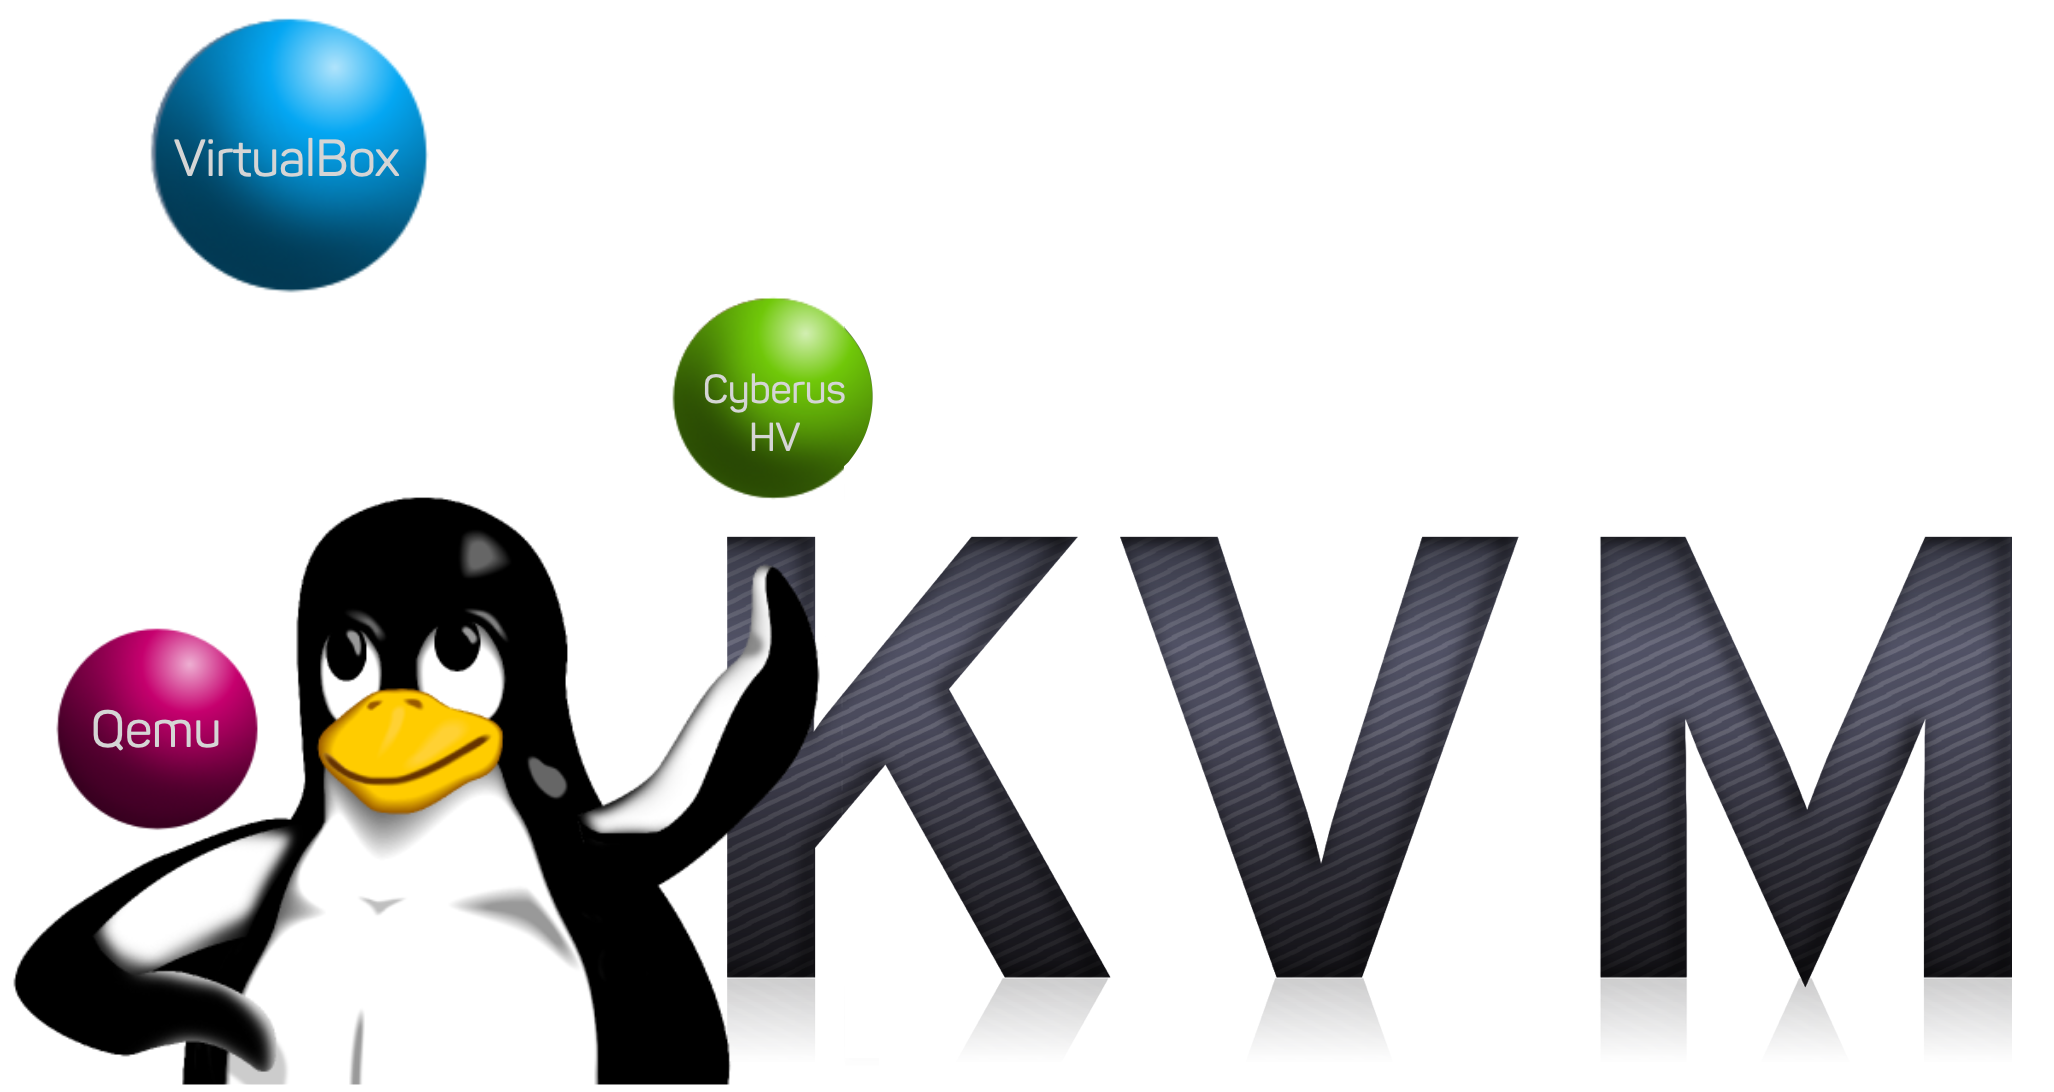 VirtualBox KVM public release